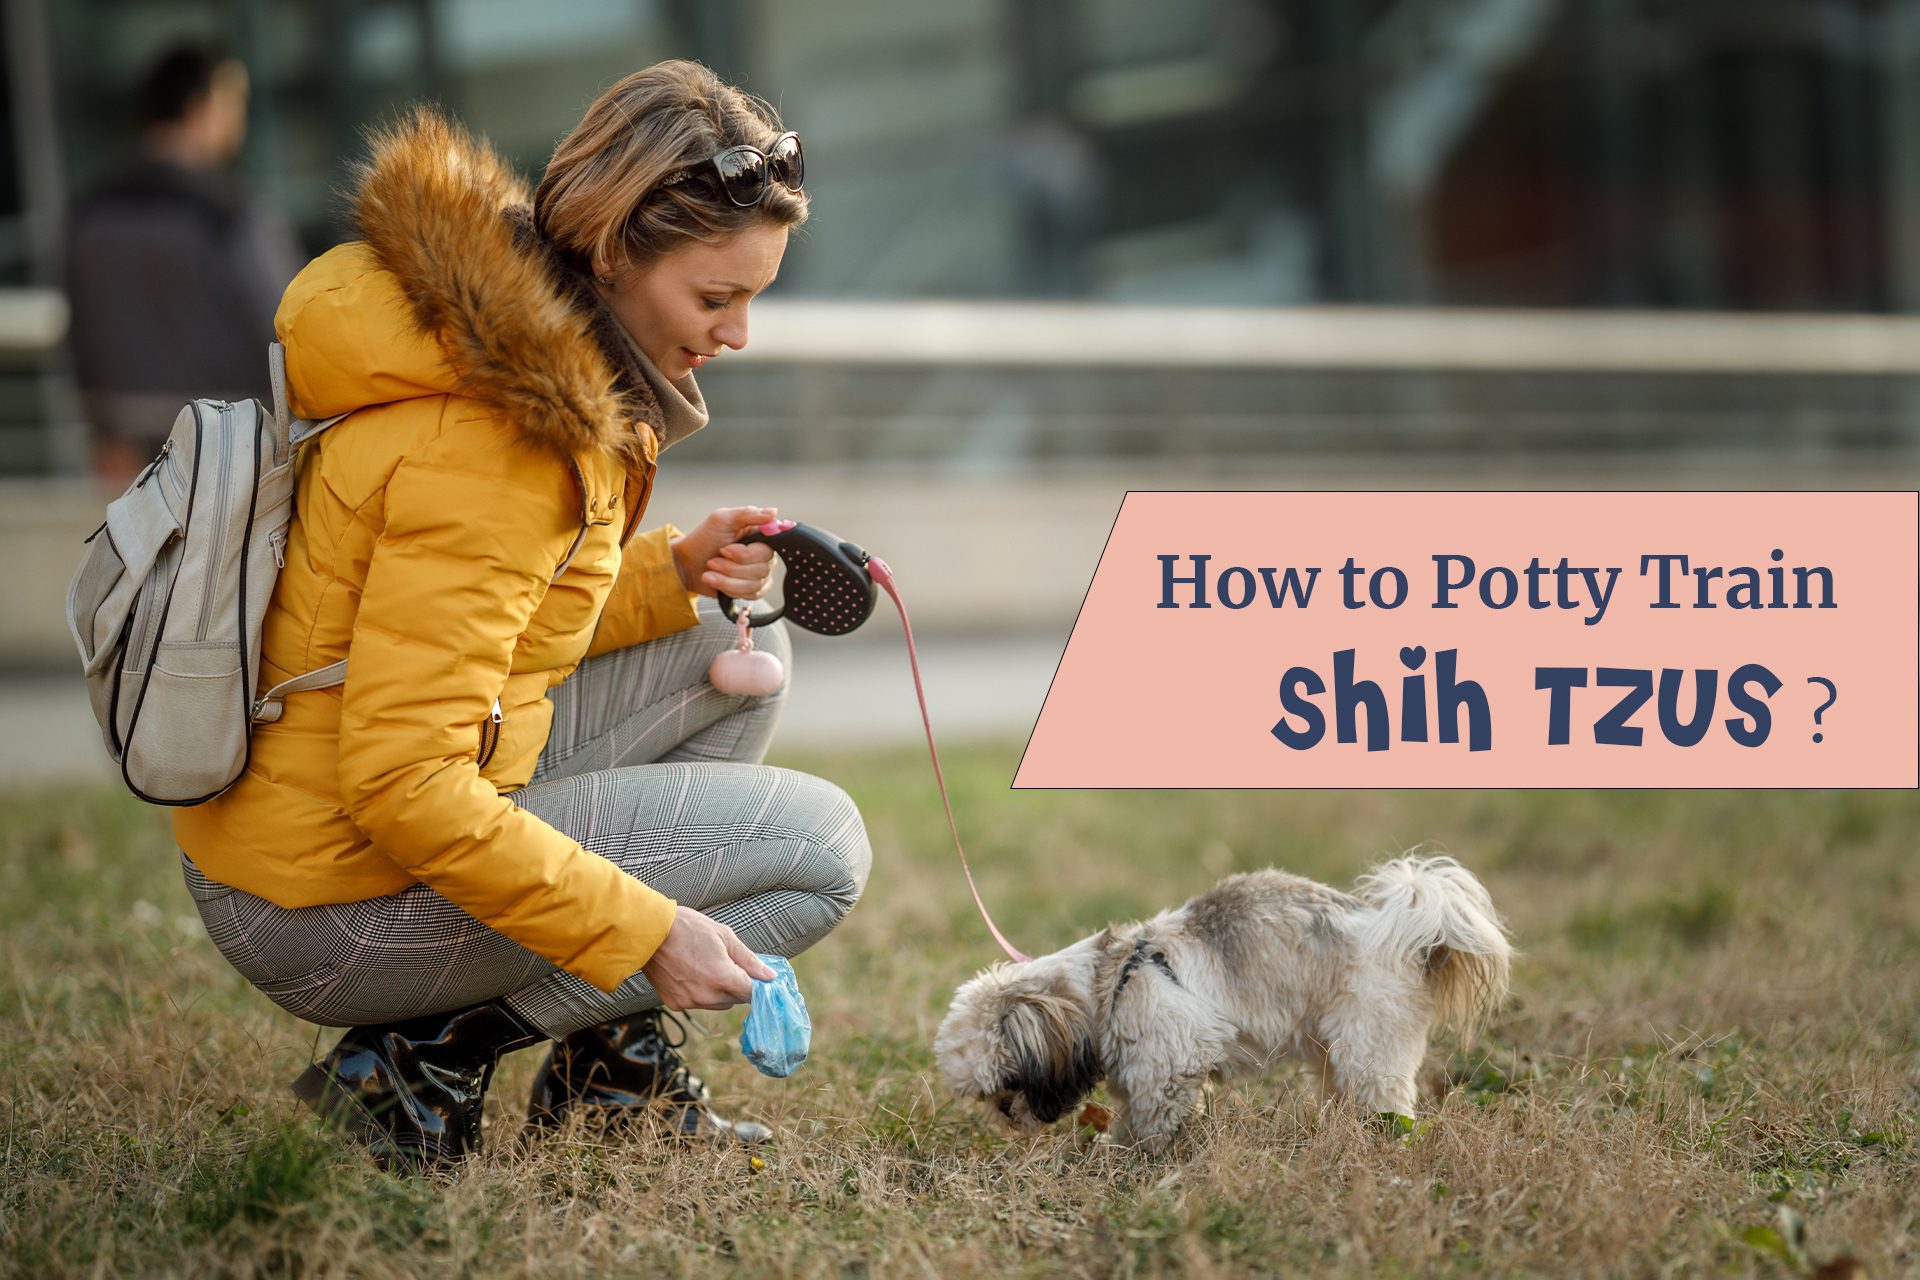 How to potty train Shih Tzus?